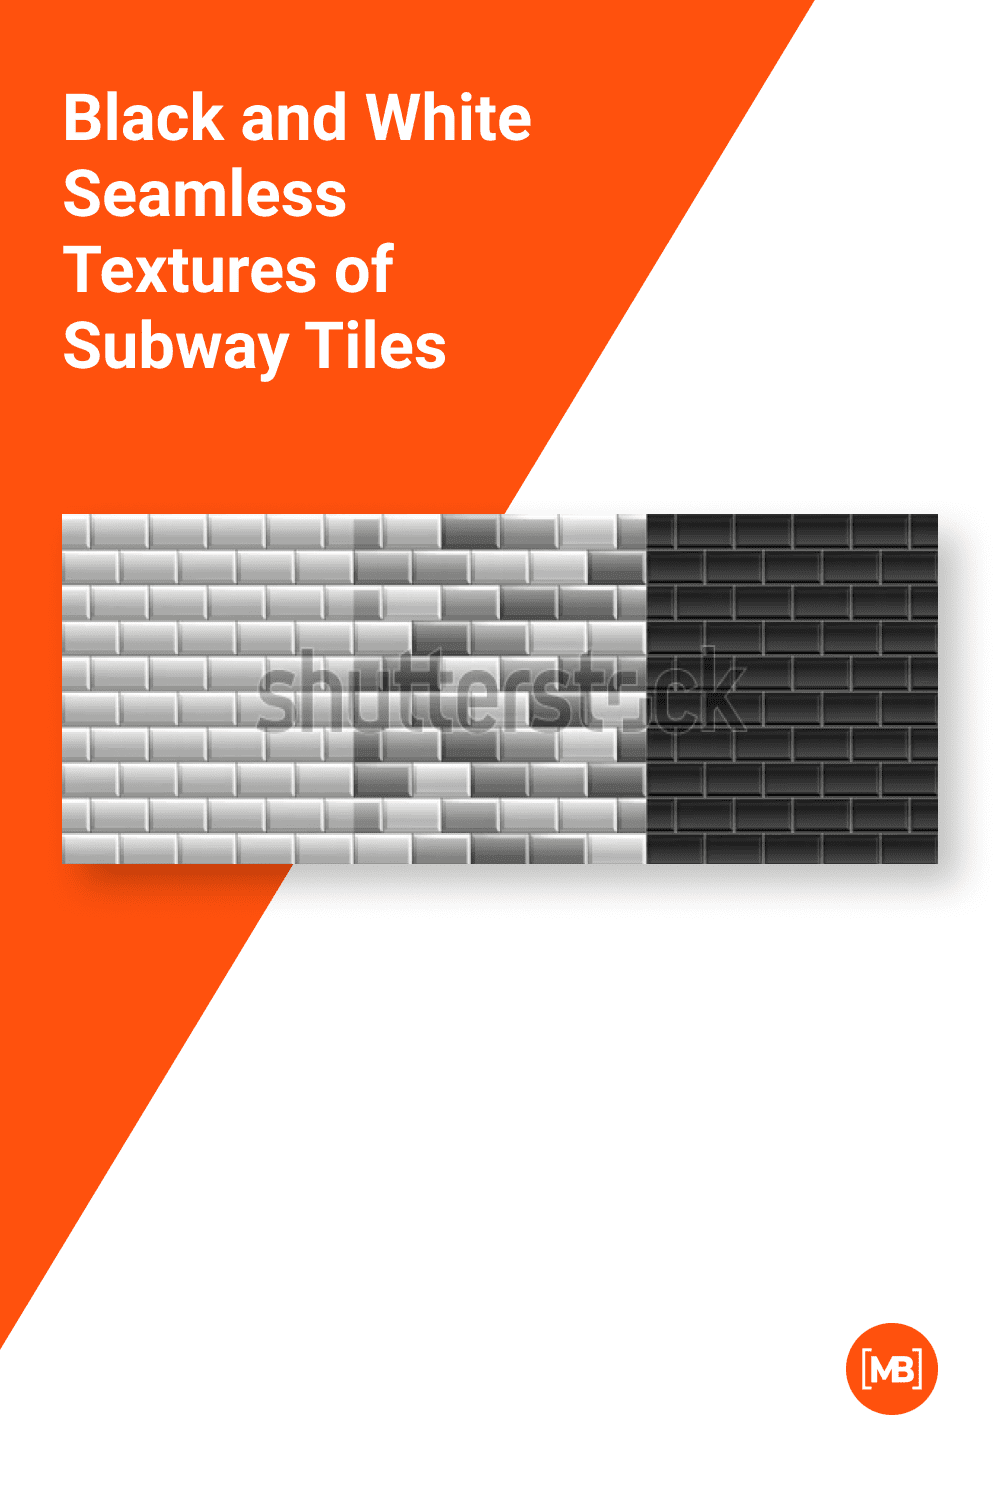 Black and white seamless textures of subway tiles.